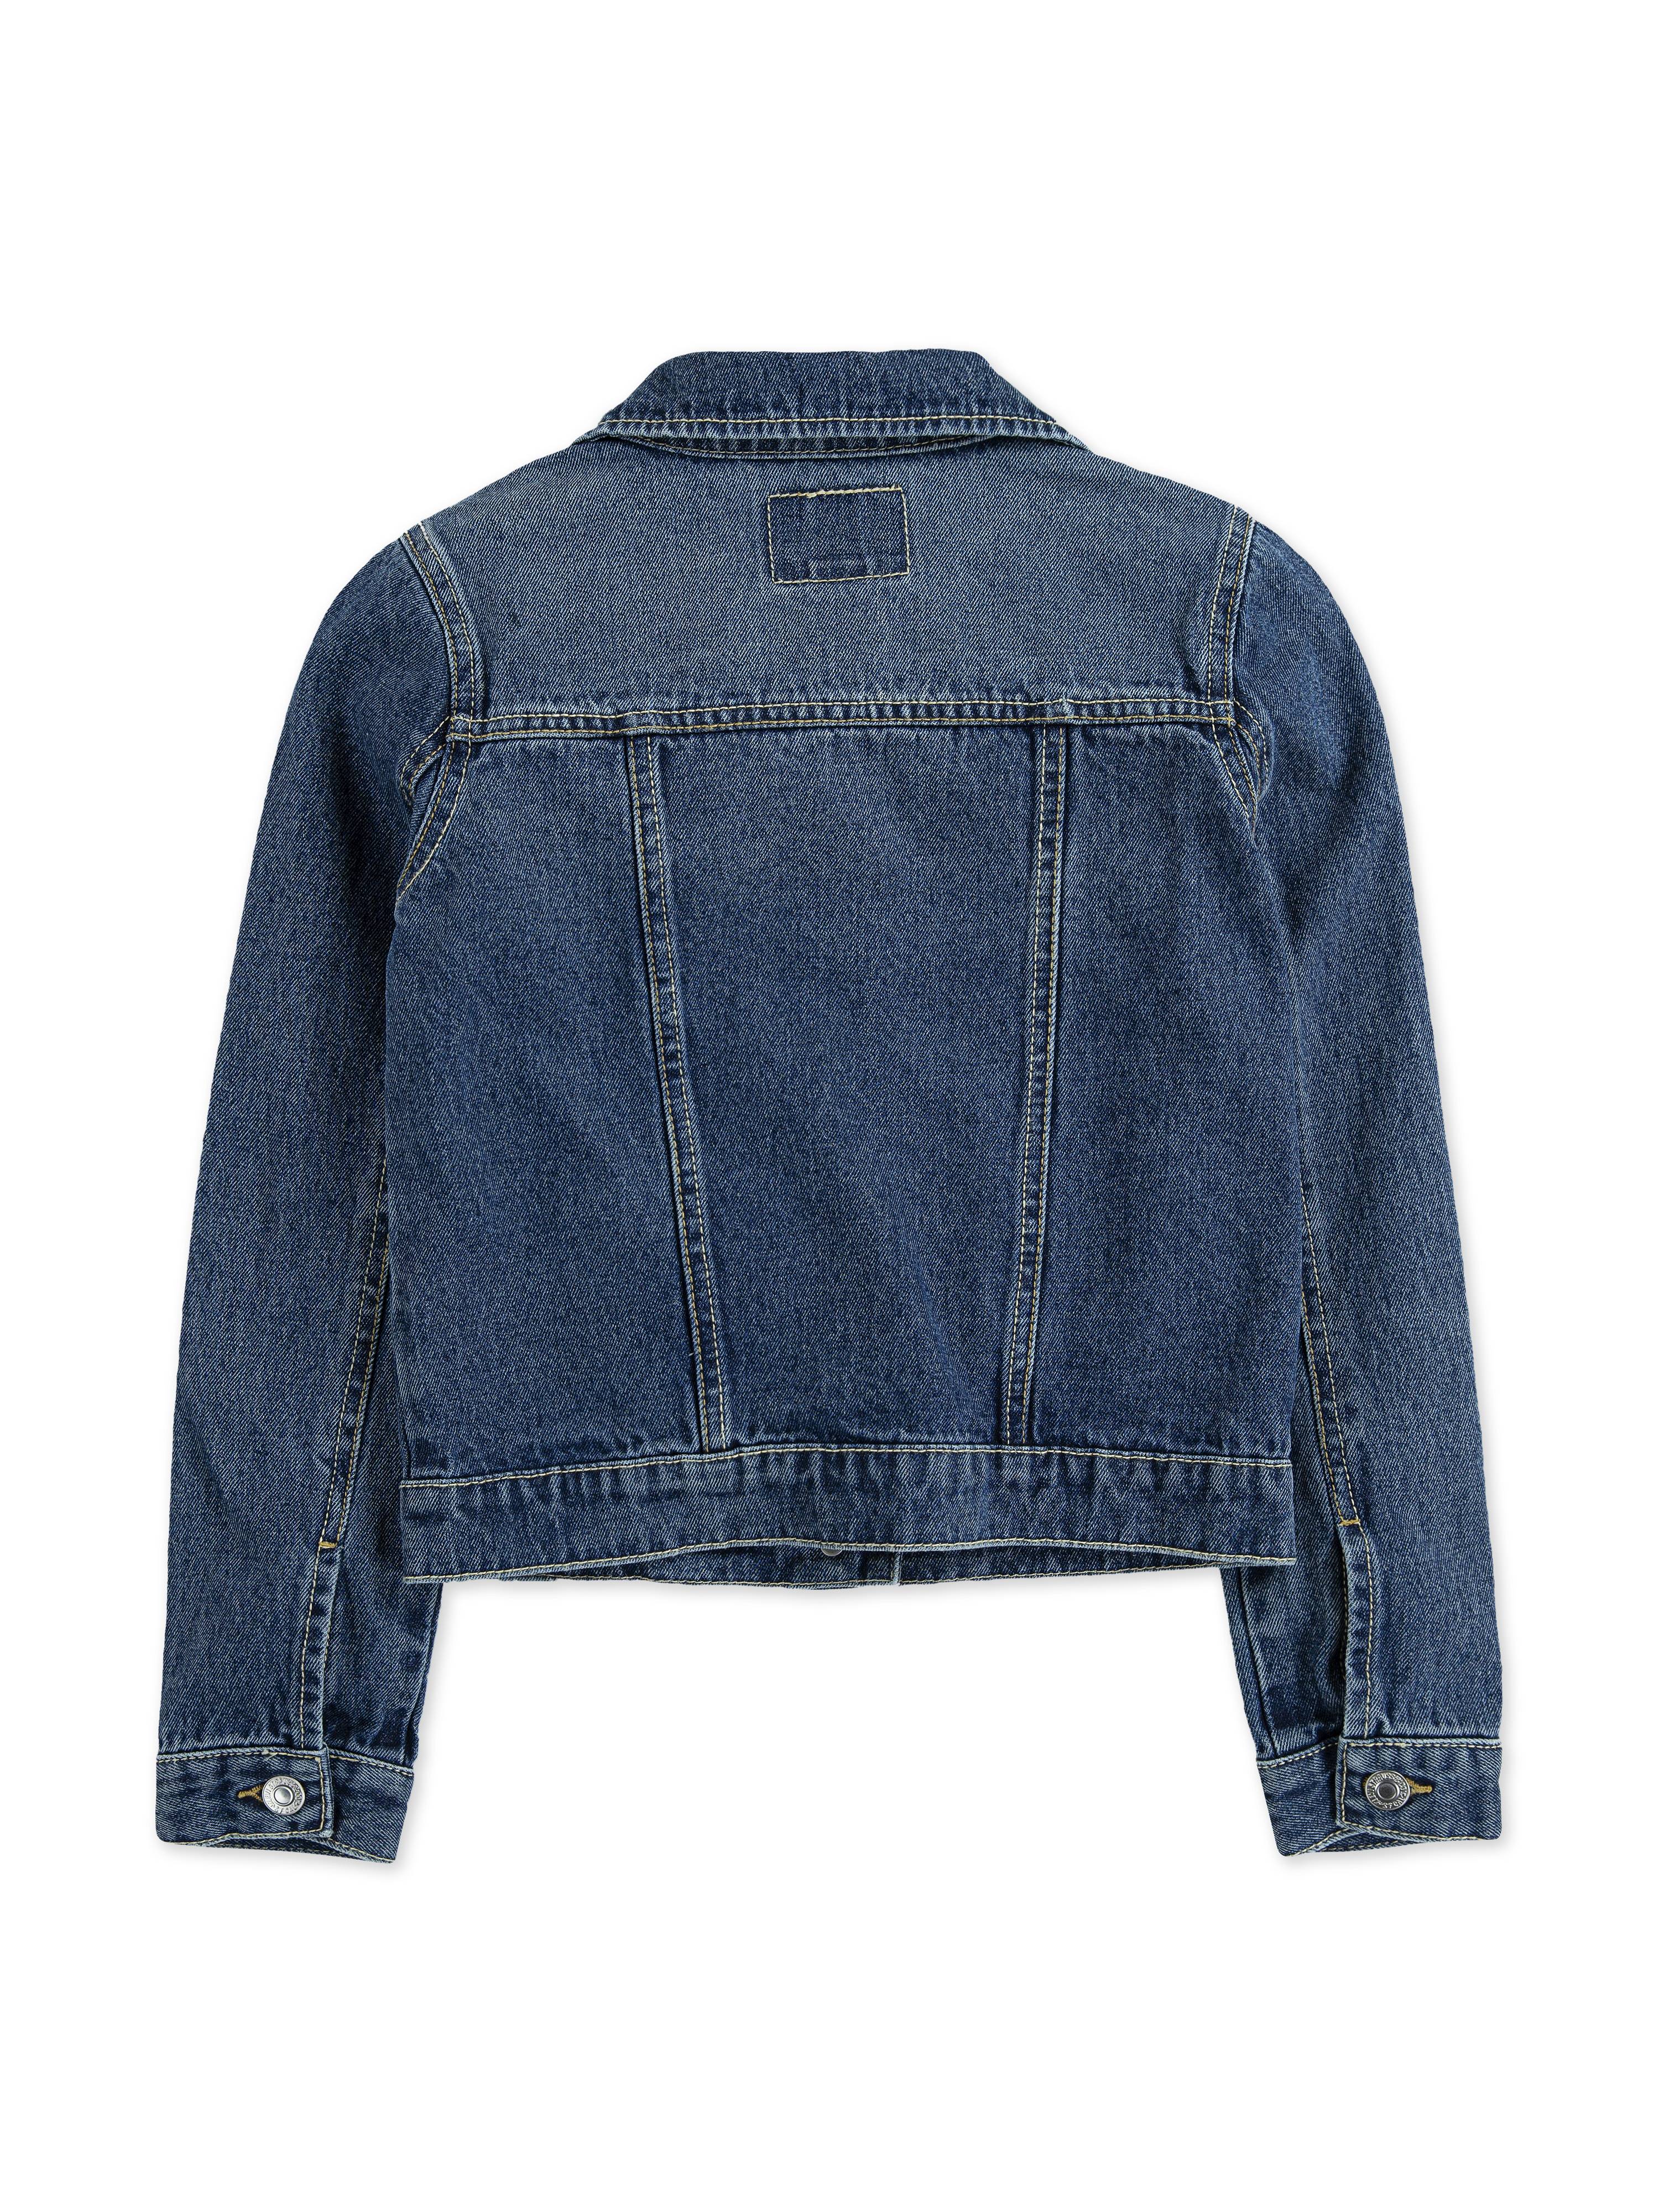 Levi's Girls' Denim Trucker Jacket, Sizes 4-16 - image 5 of 7